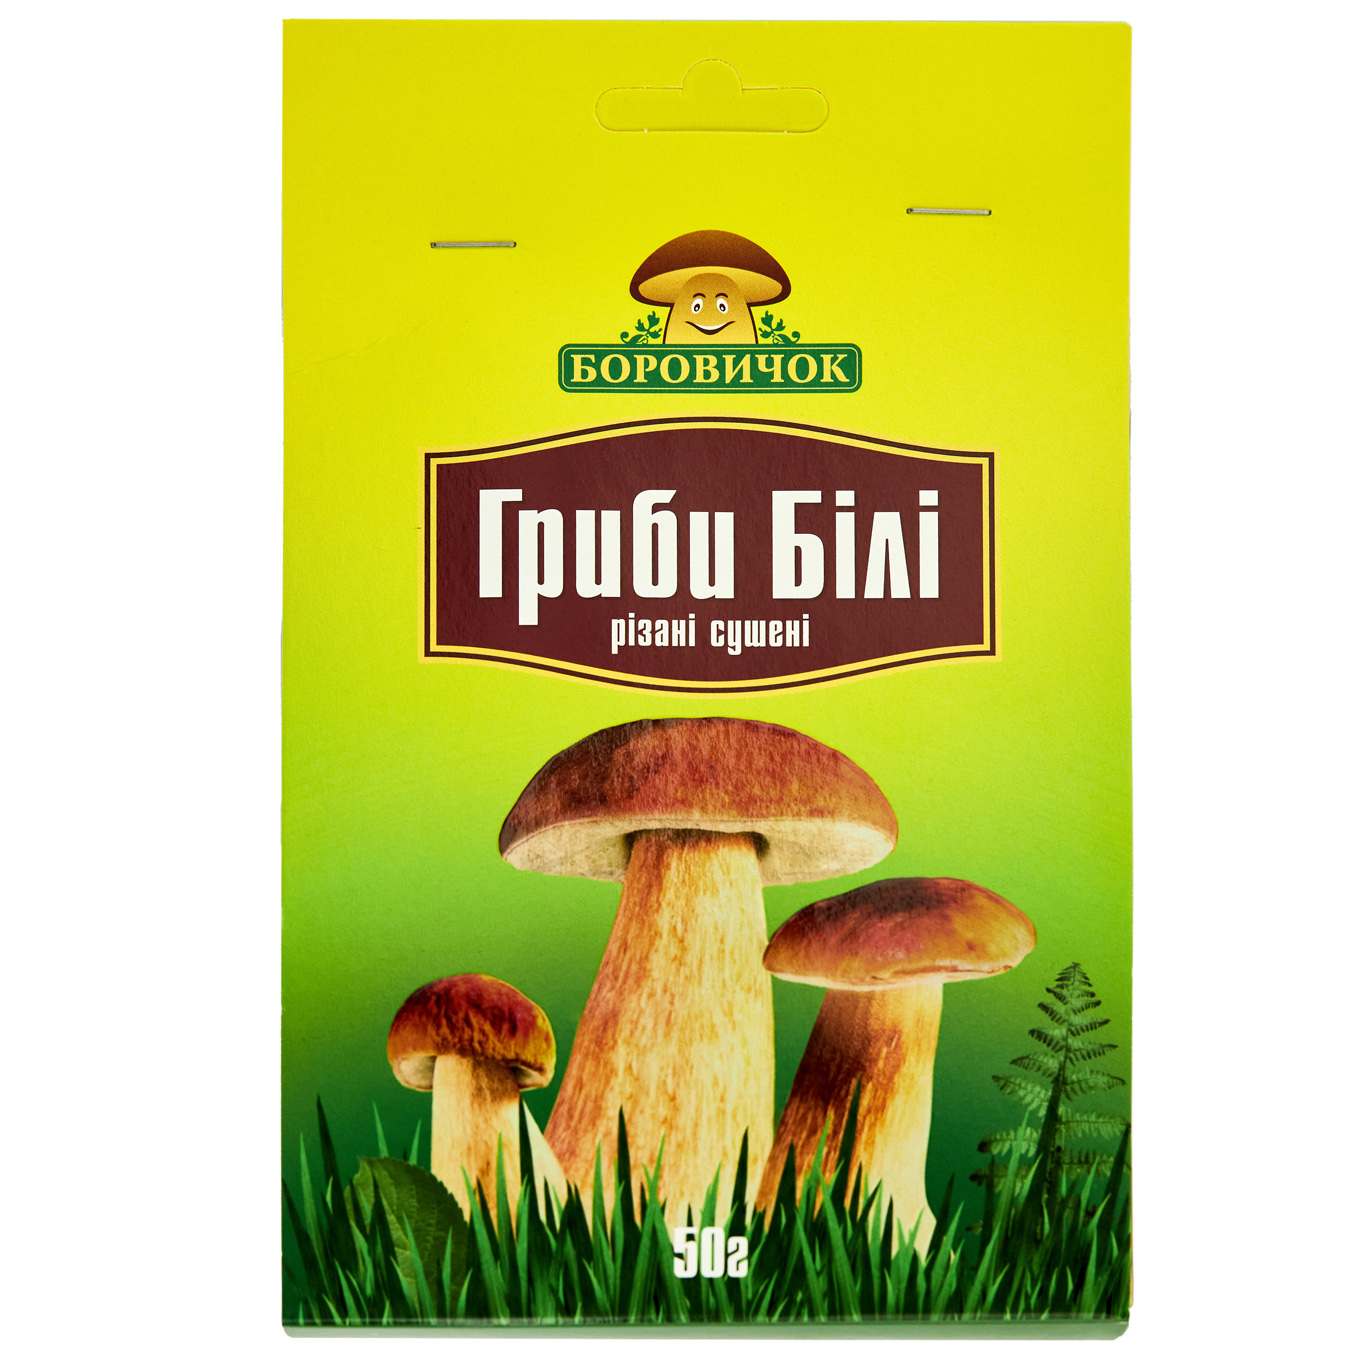 Dried white mushrooms(Penny Bun) Borovichok 50g